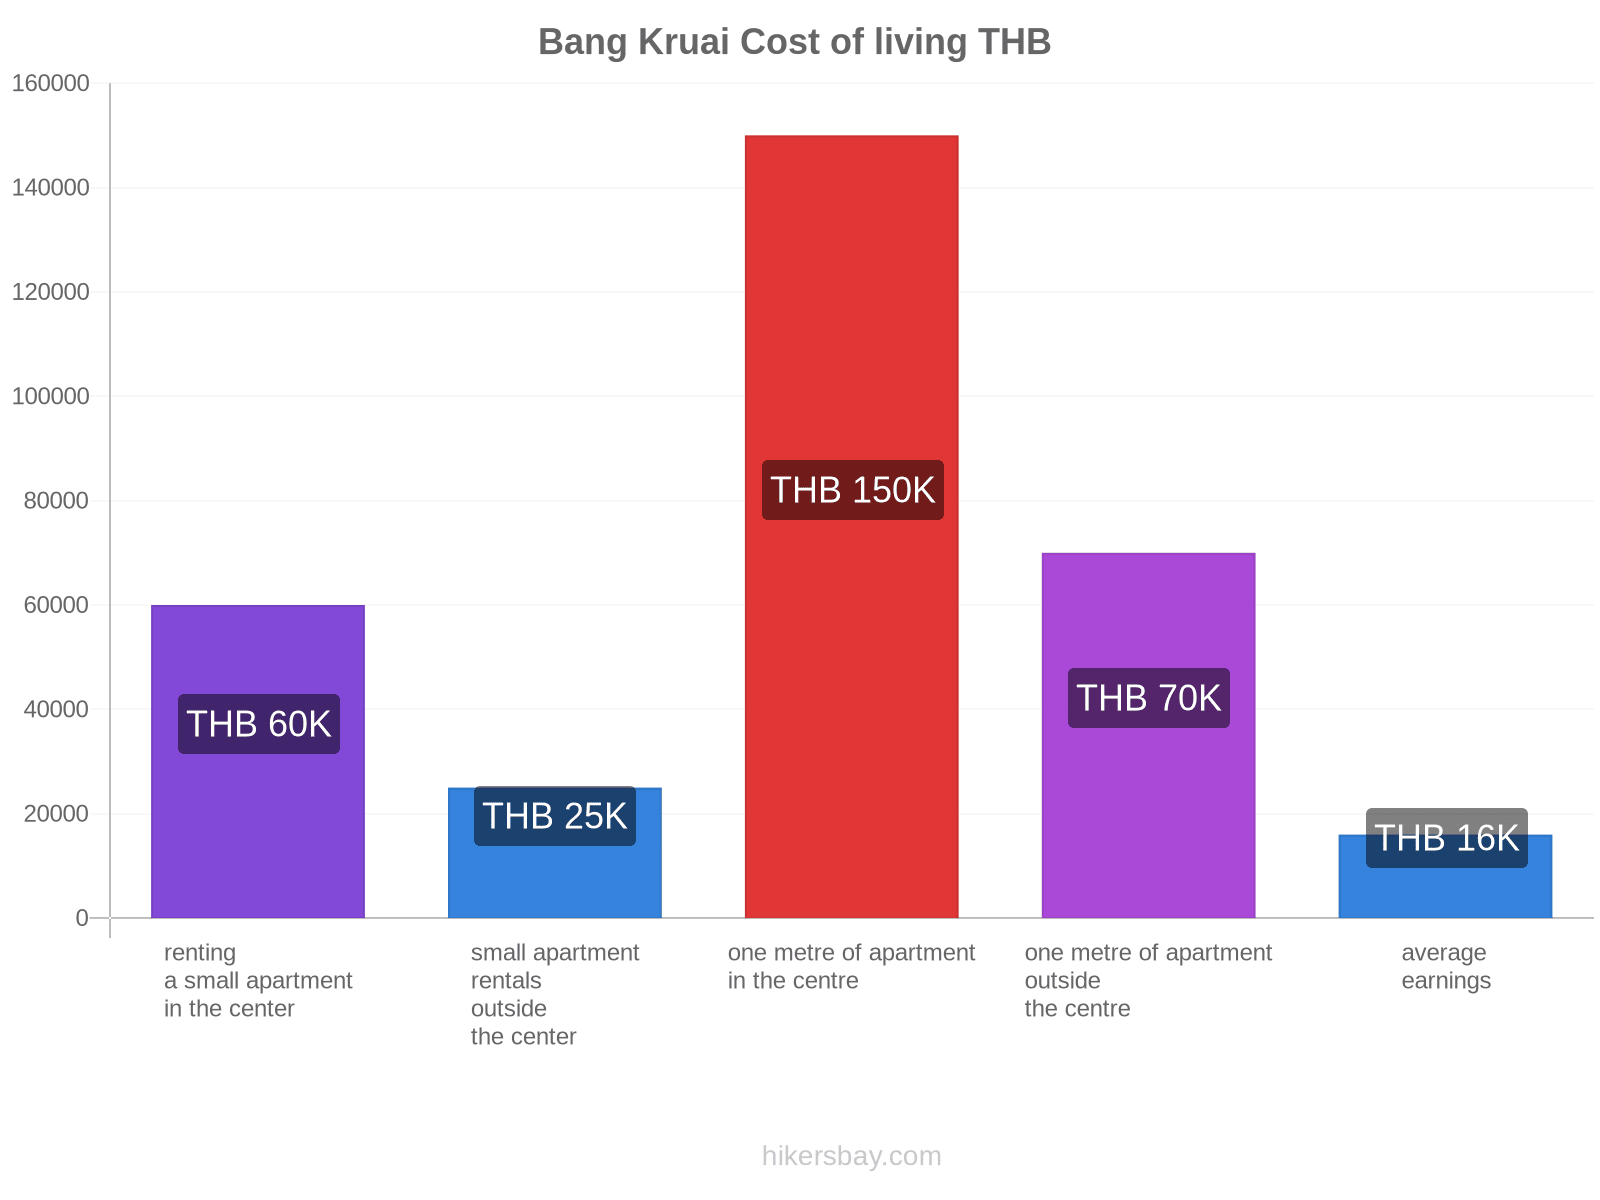 Bang Kruai cost of living hikersbay.com